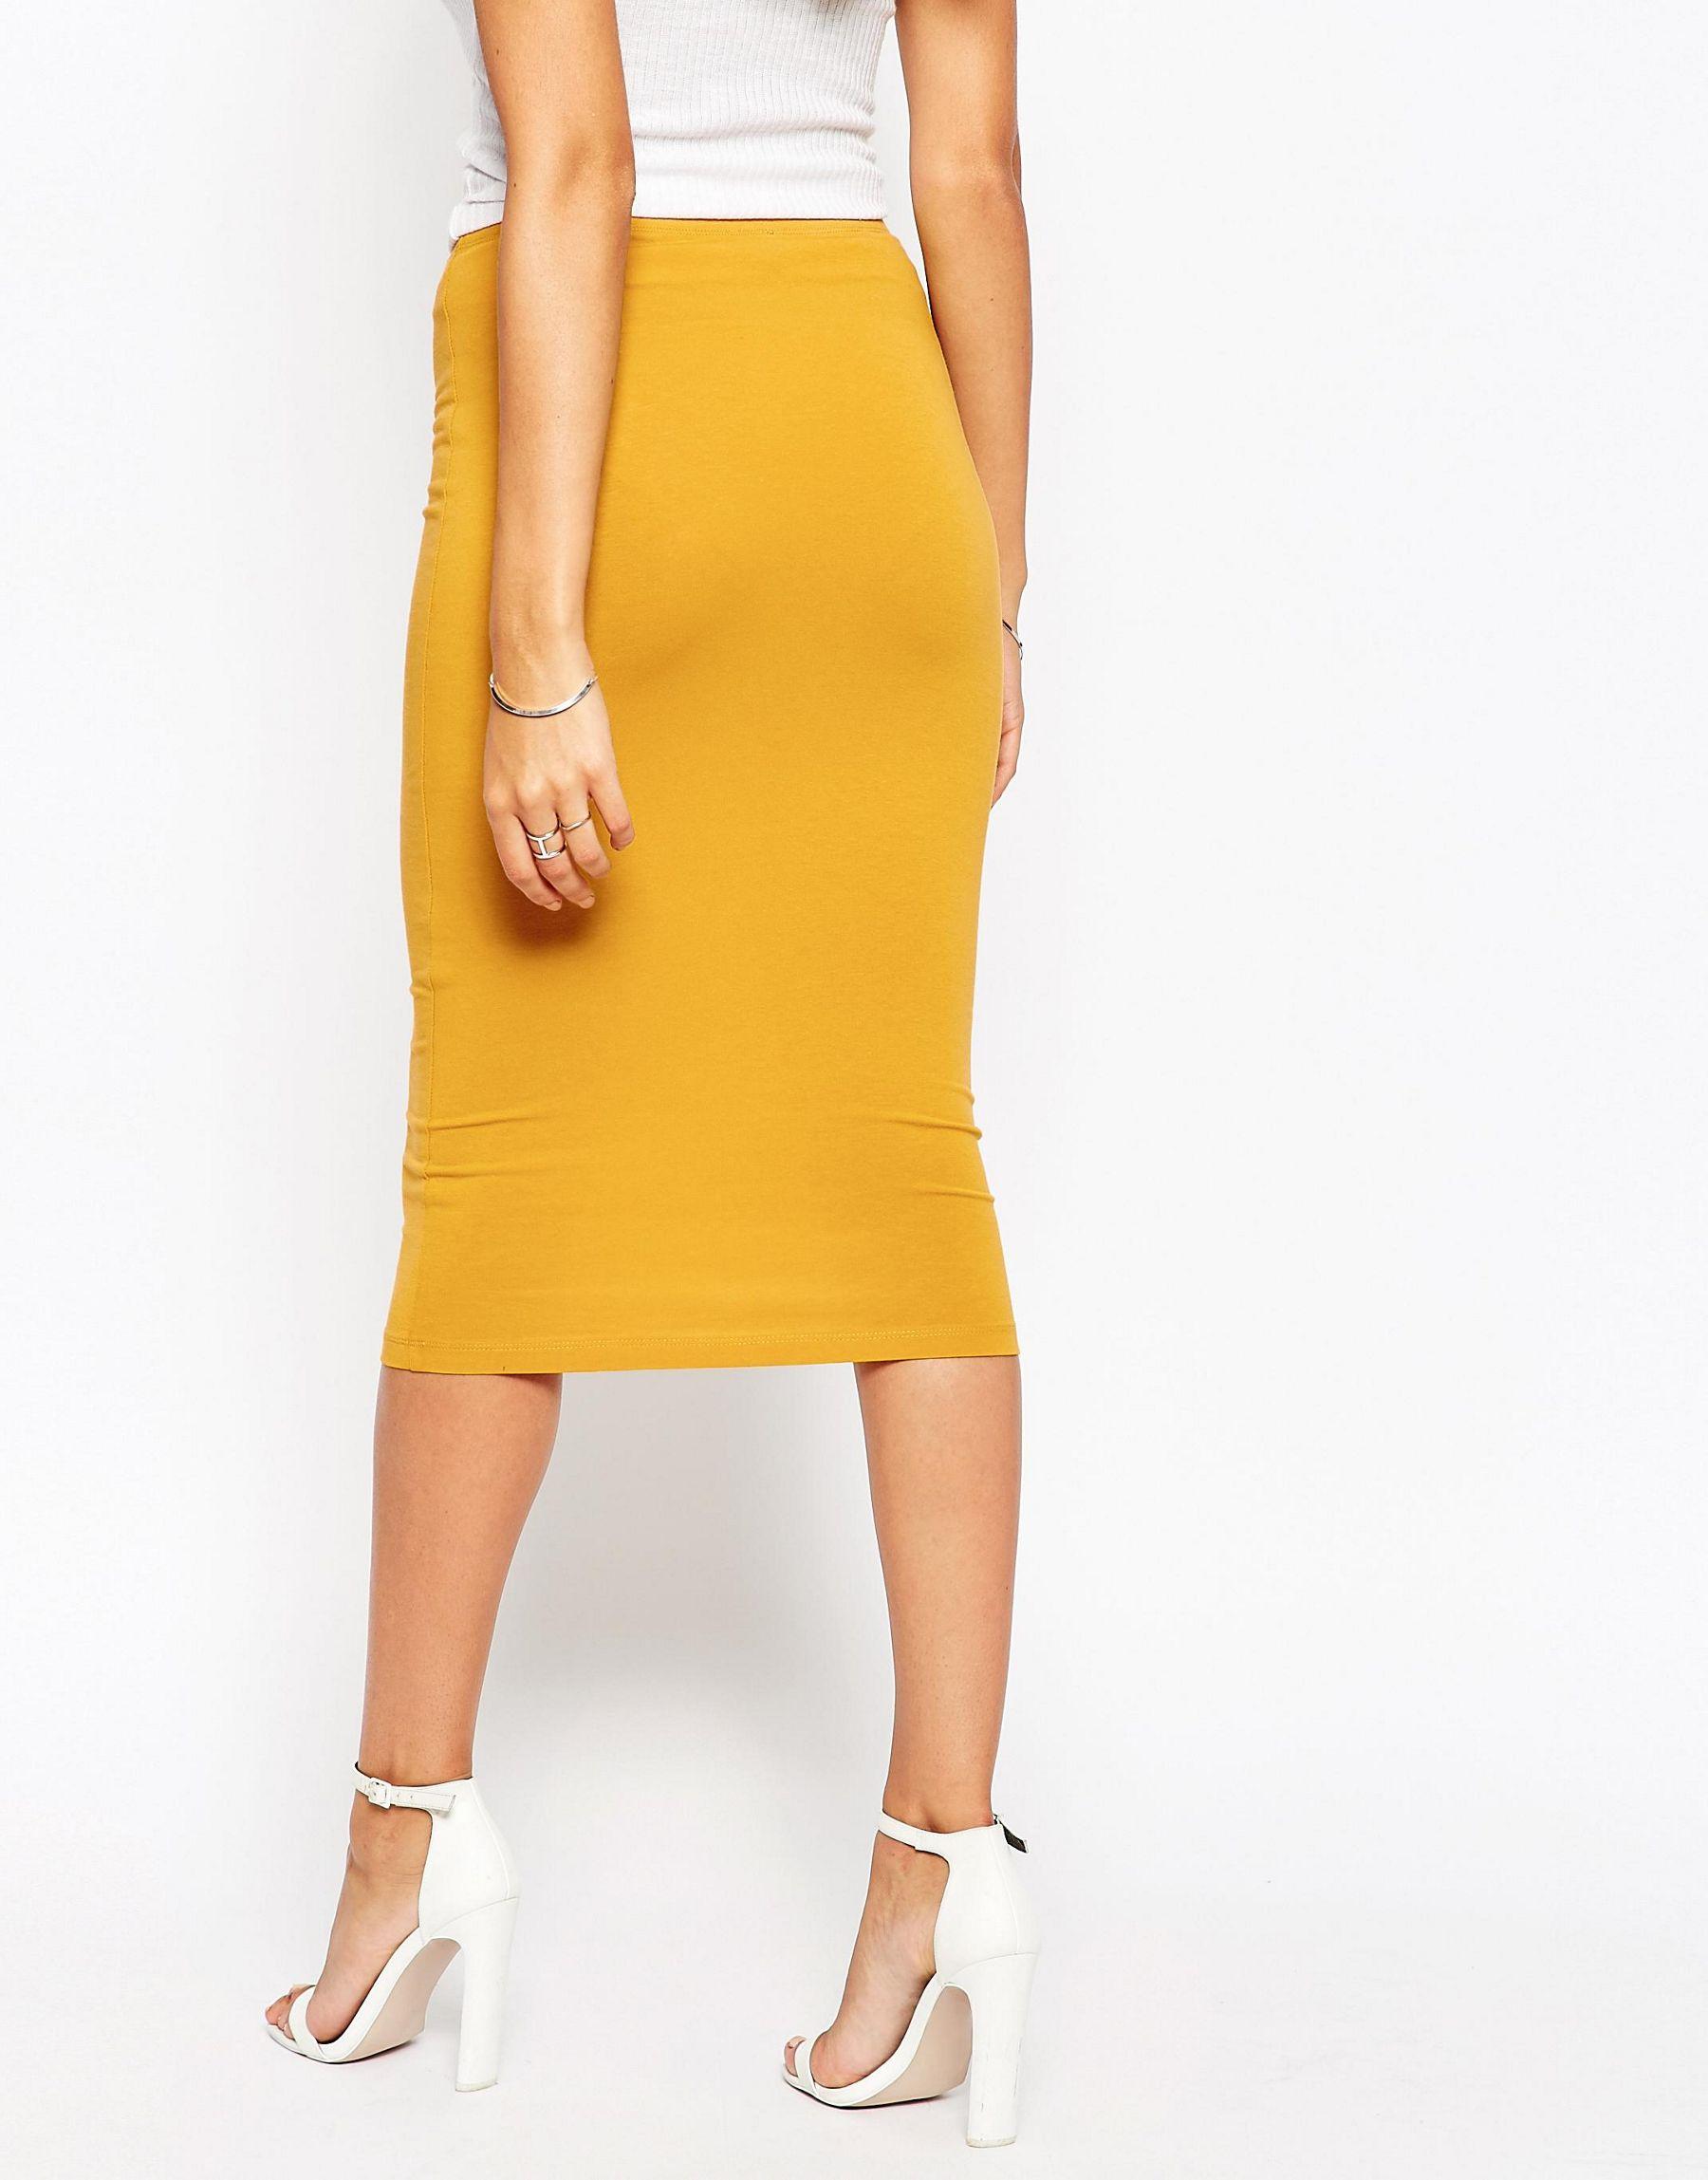 ASOS Jersey Knee Length Pencil Skirt in Mustard (Yellow) - Lyst